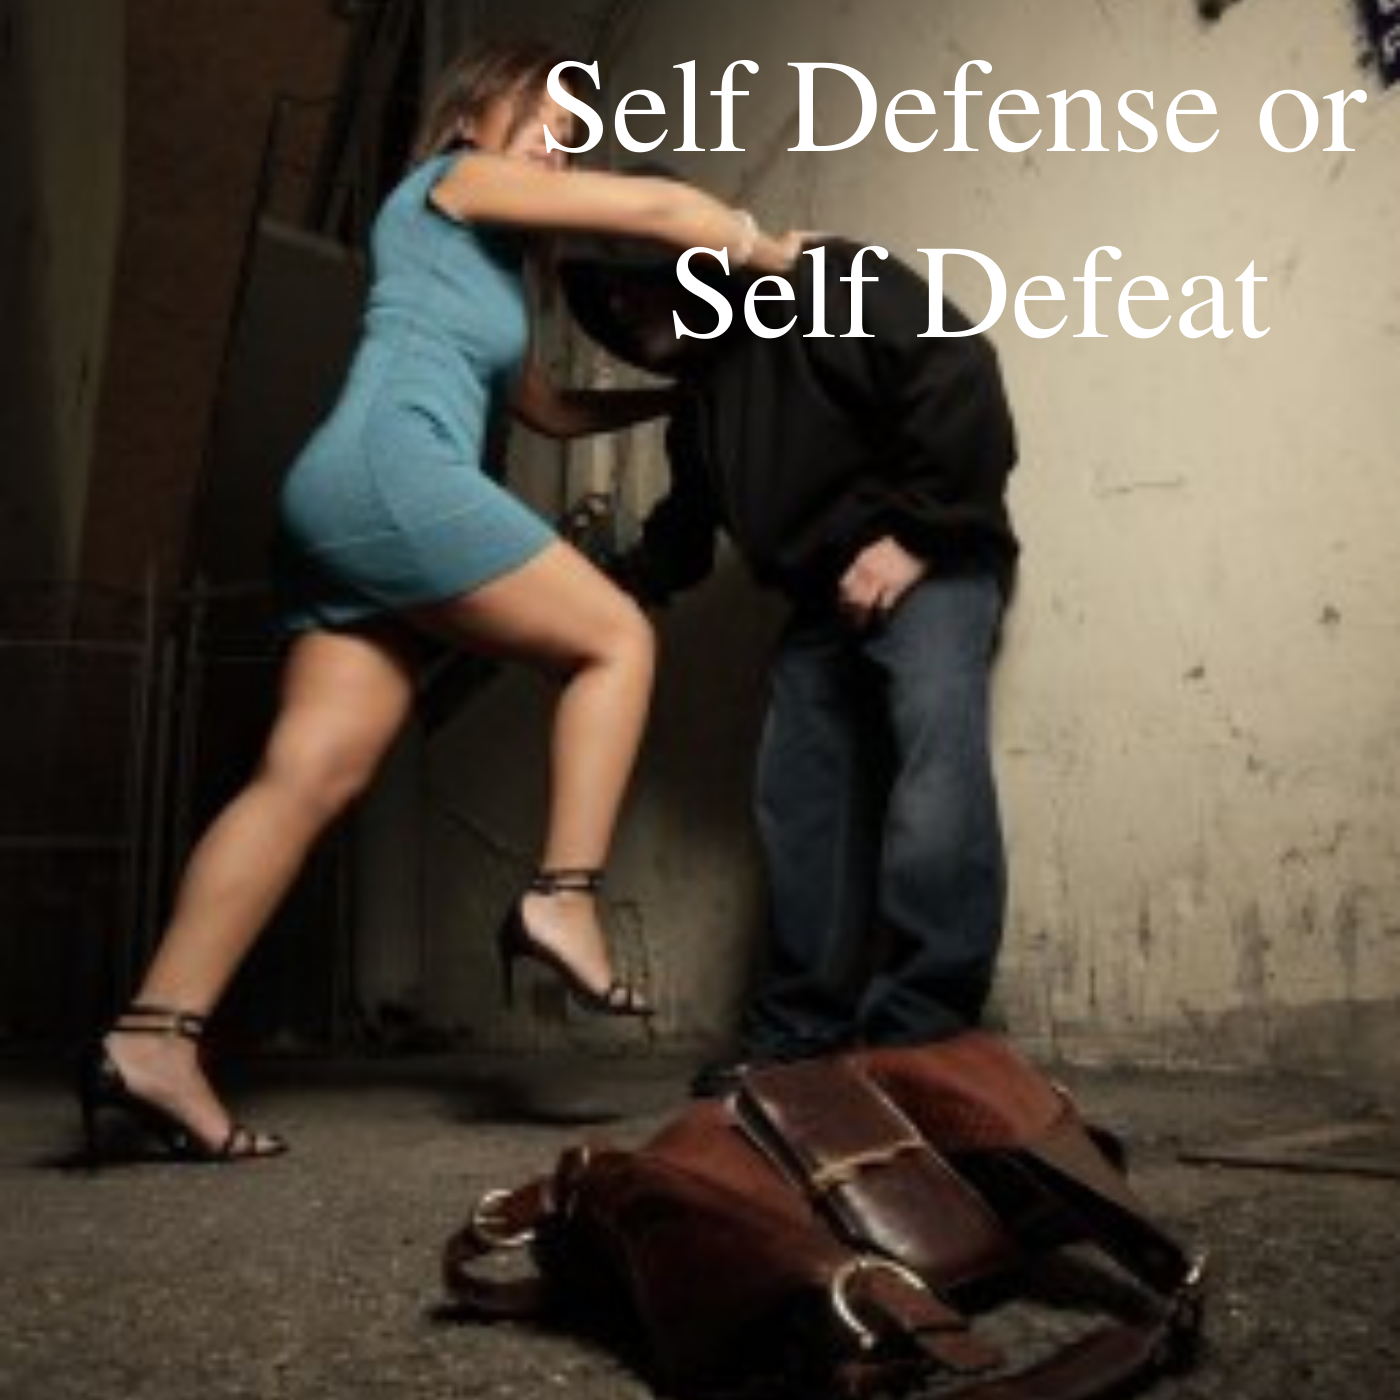 * Self Defense or Self Defeat